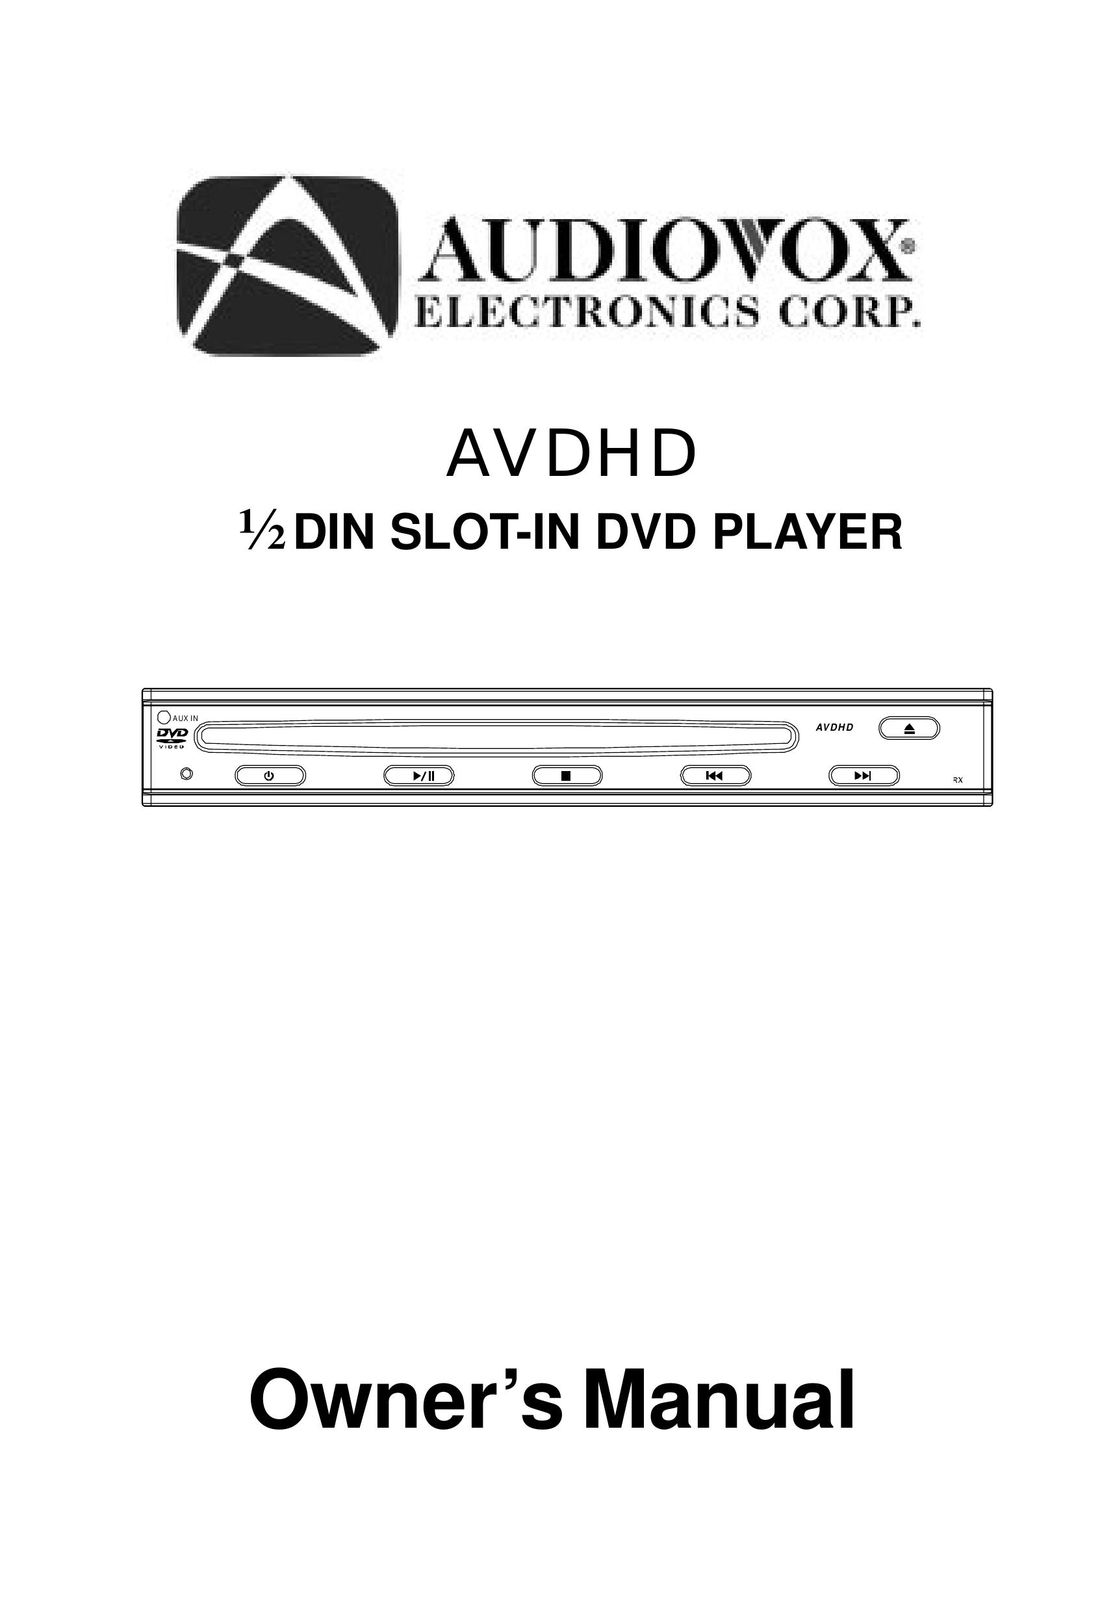 Audiovox AVDHD DVD Player User Manual